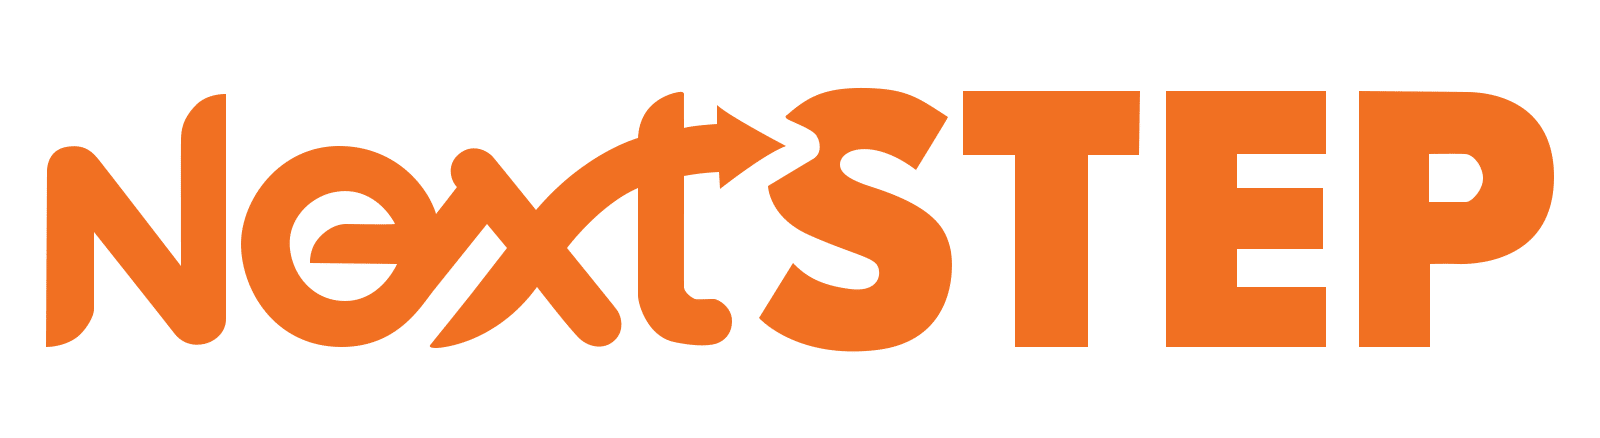 NextStep_logo arancio